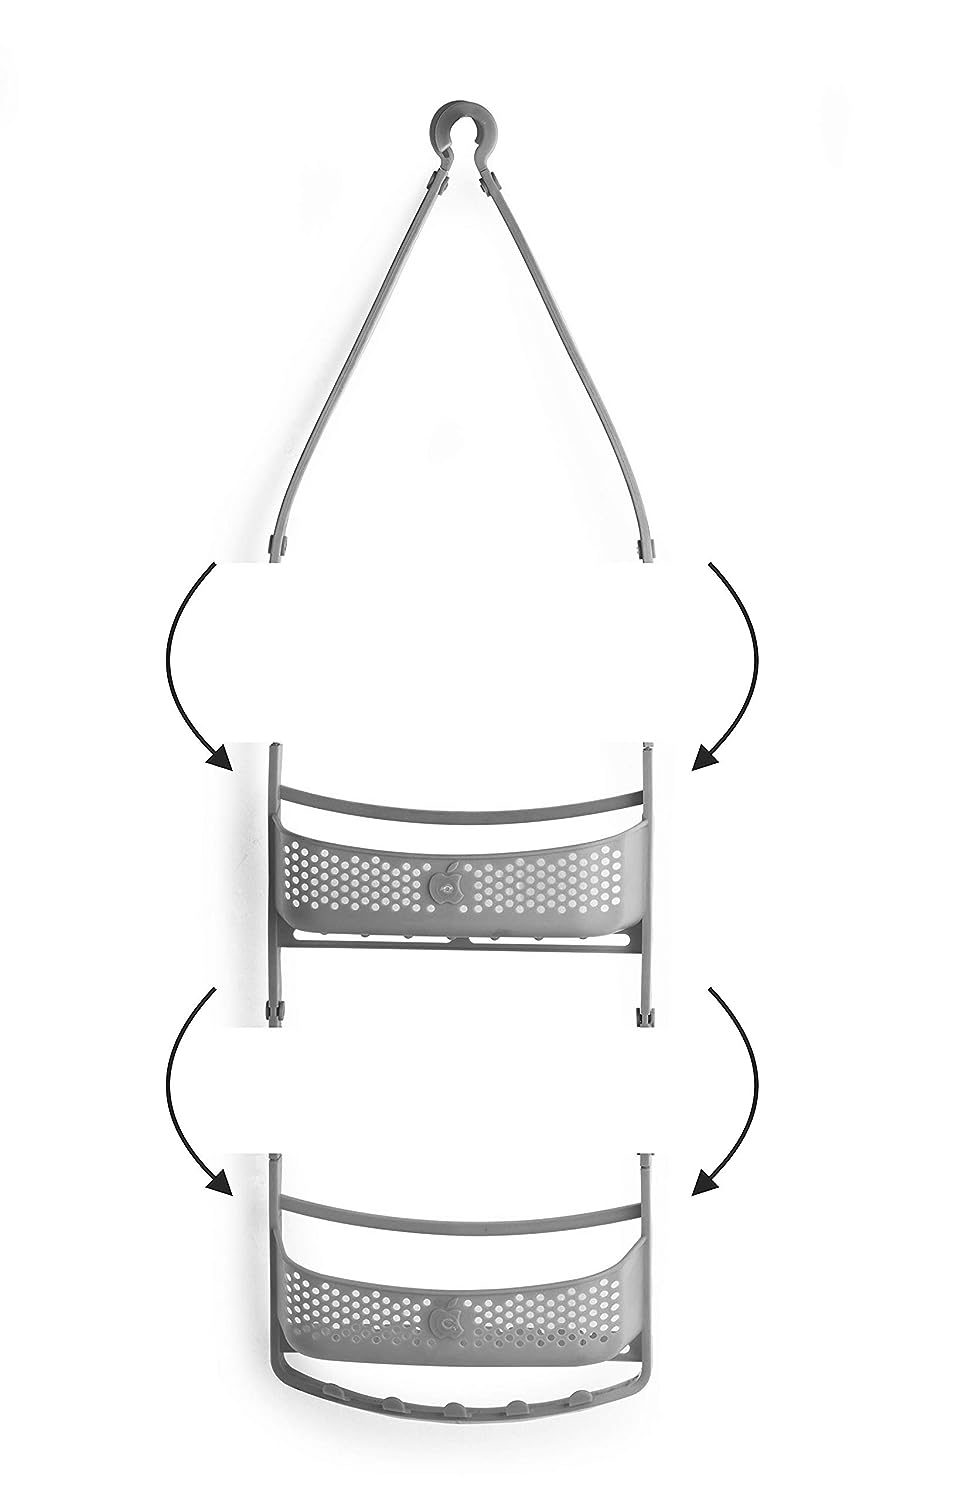 Machak Plastic Hanging Shower Caddy Hanger With Adjustable Arms Bathroom Shelf (2 Layer, Grey)